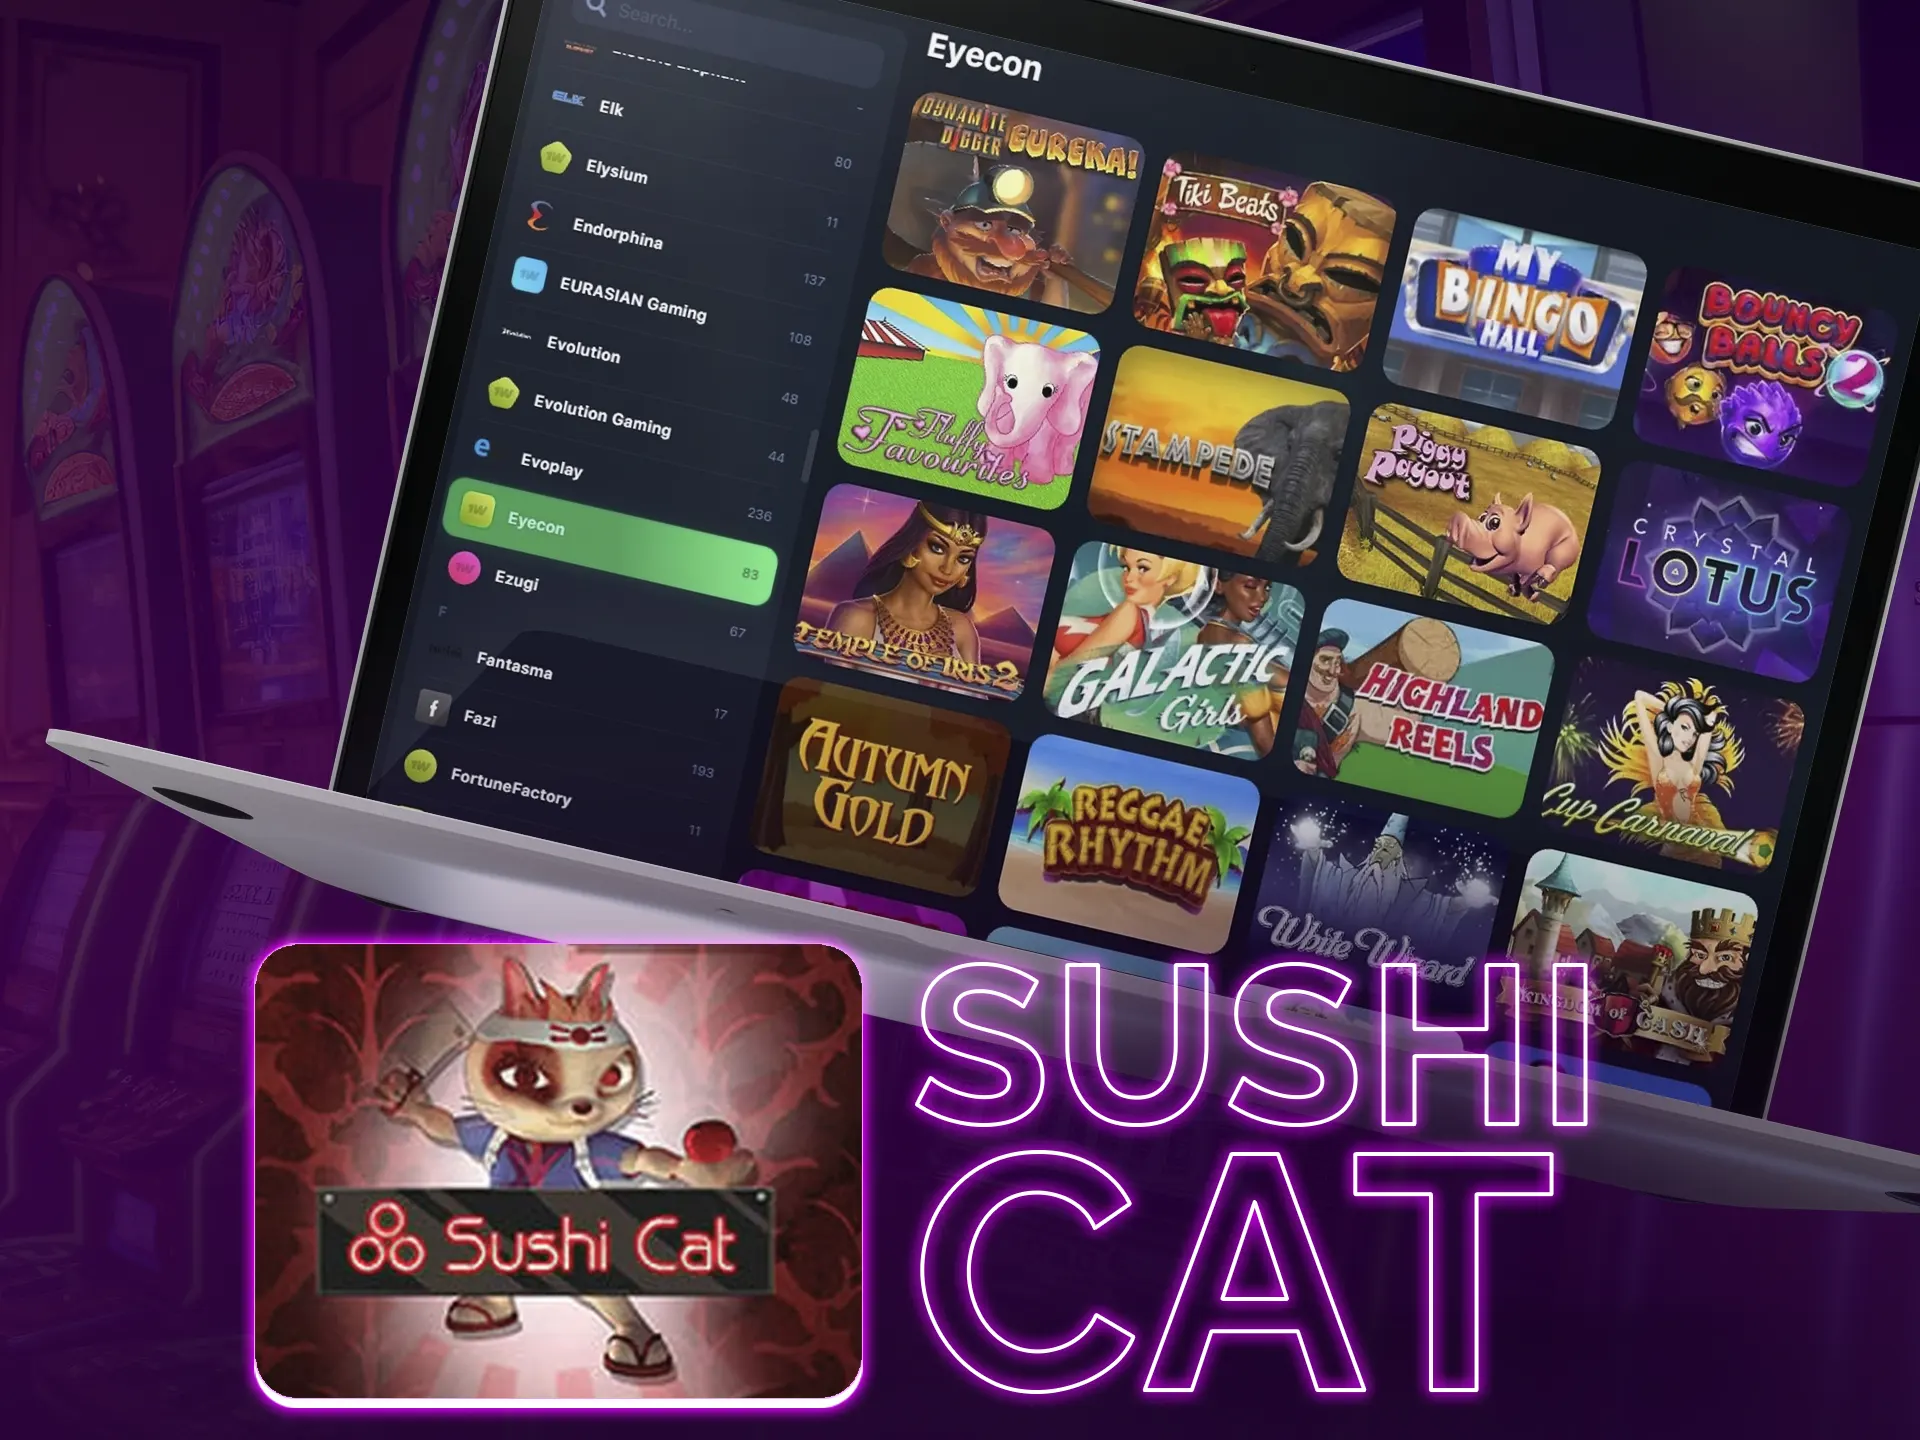 Play Sushi Cat slot, provided by Eyecon!